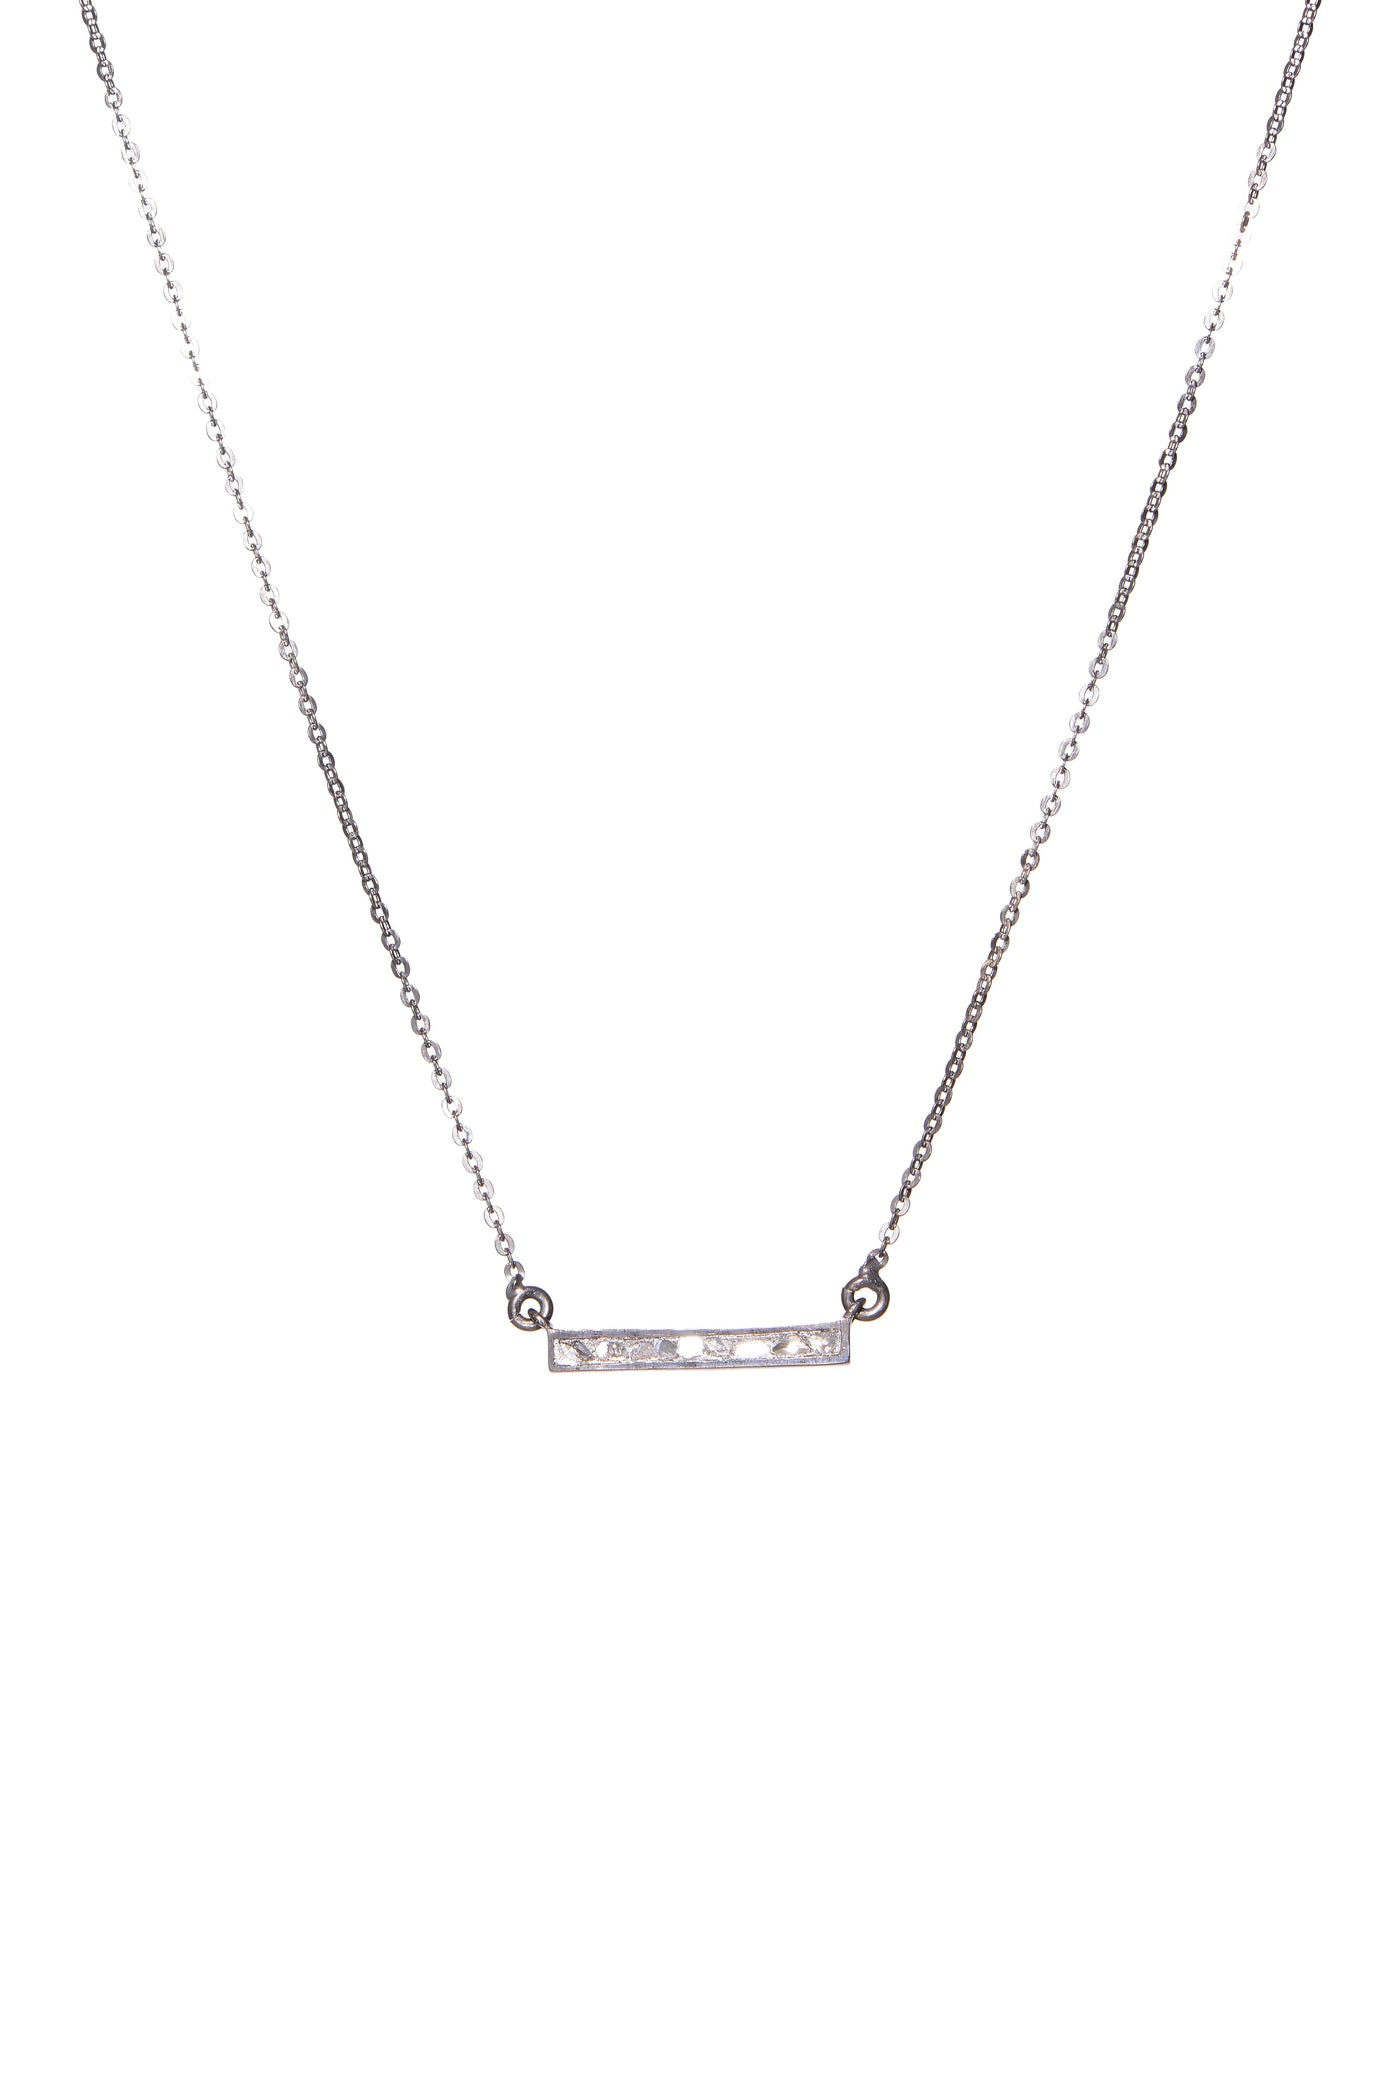 sterling silver diamond rectangle pendant necklace